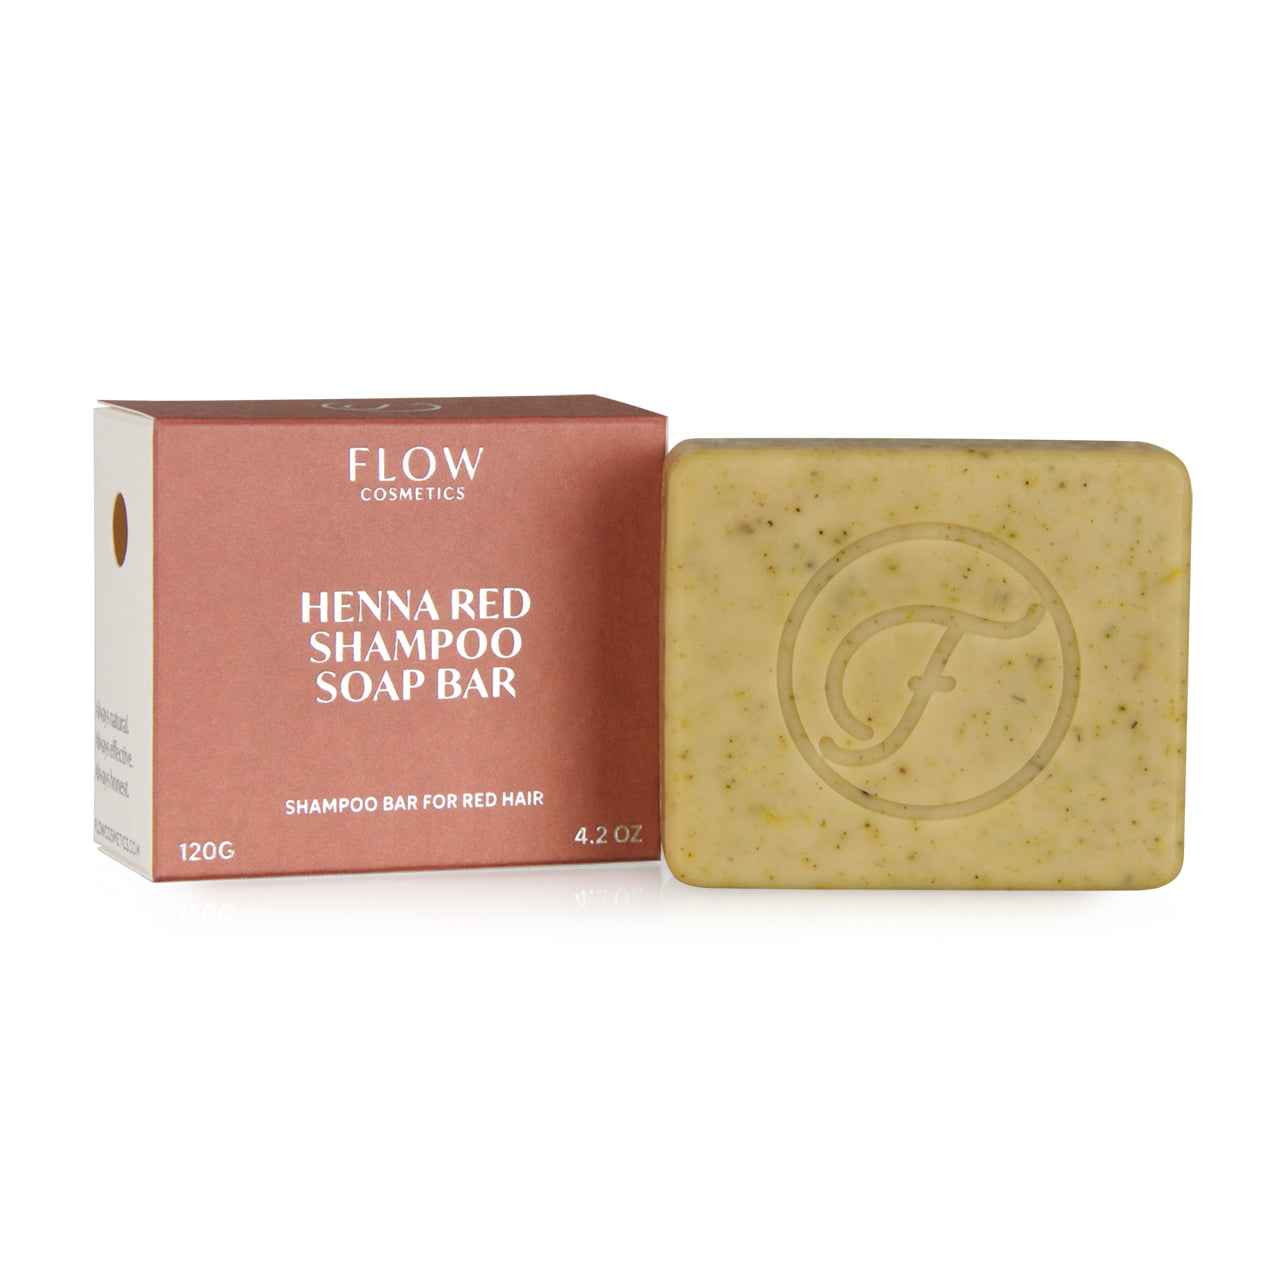 Flow Henna Red Shampoo Soap Bar - shampoopala punaisille hiuksille 120 g